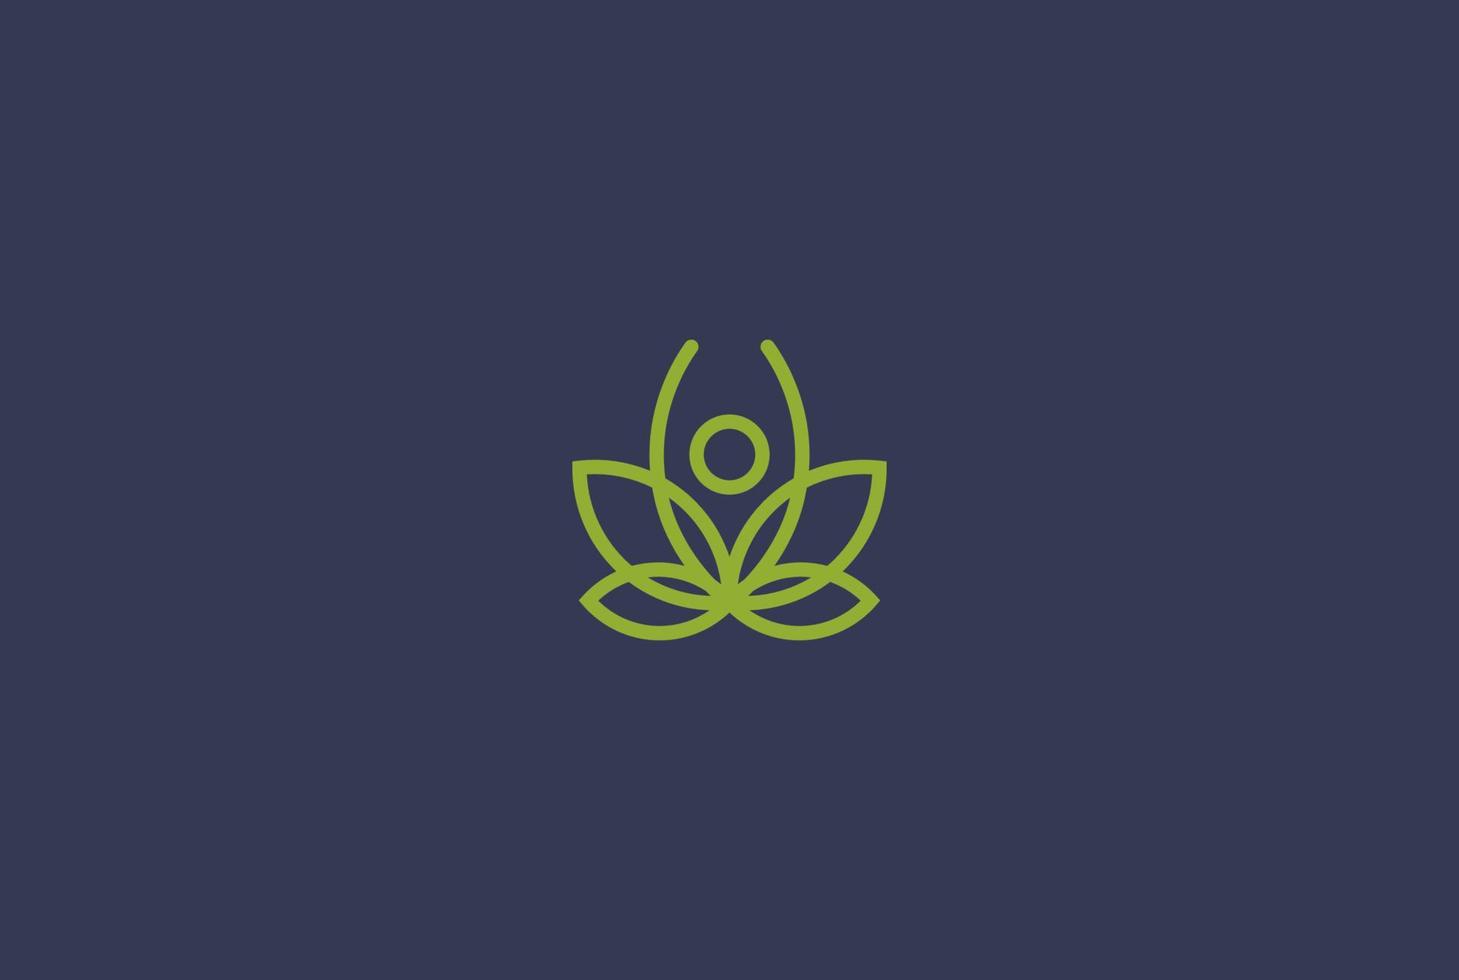 semplice yoga umano minimalista con loto o cannabis marijuana leaf logo design vector